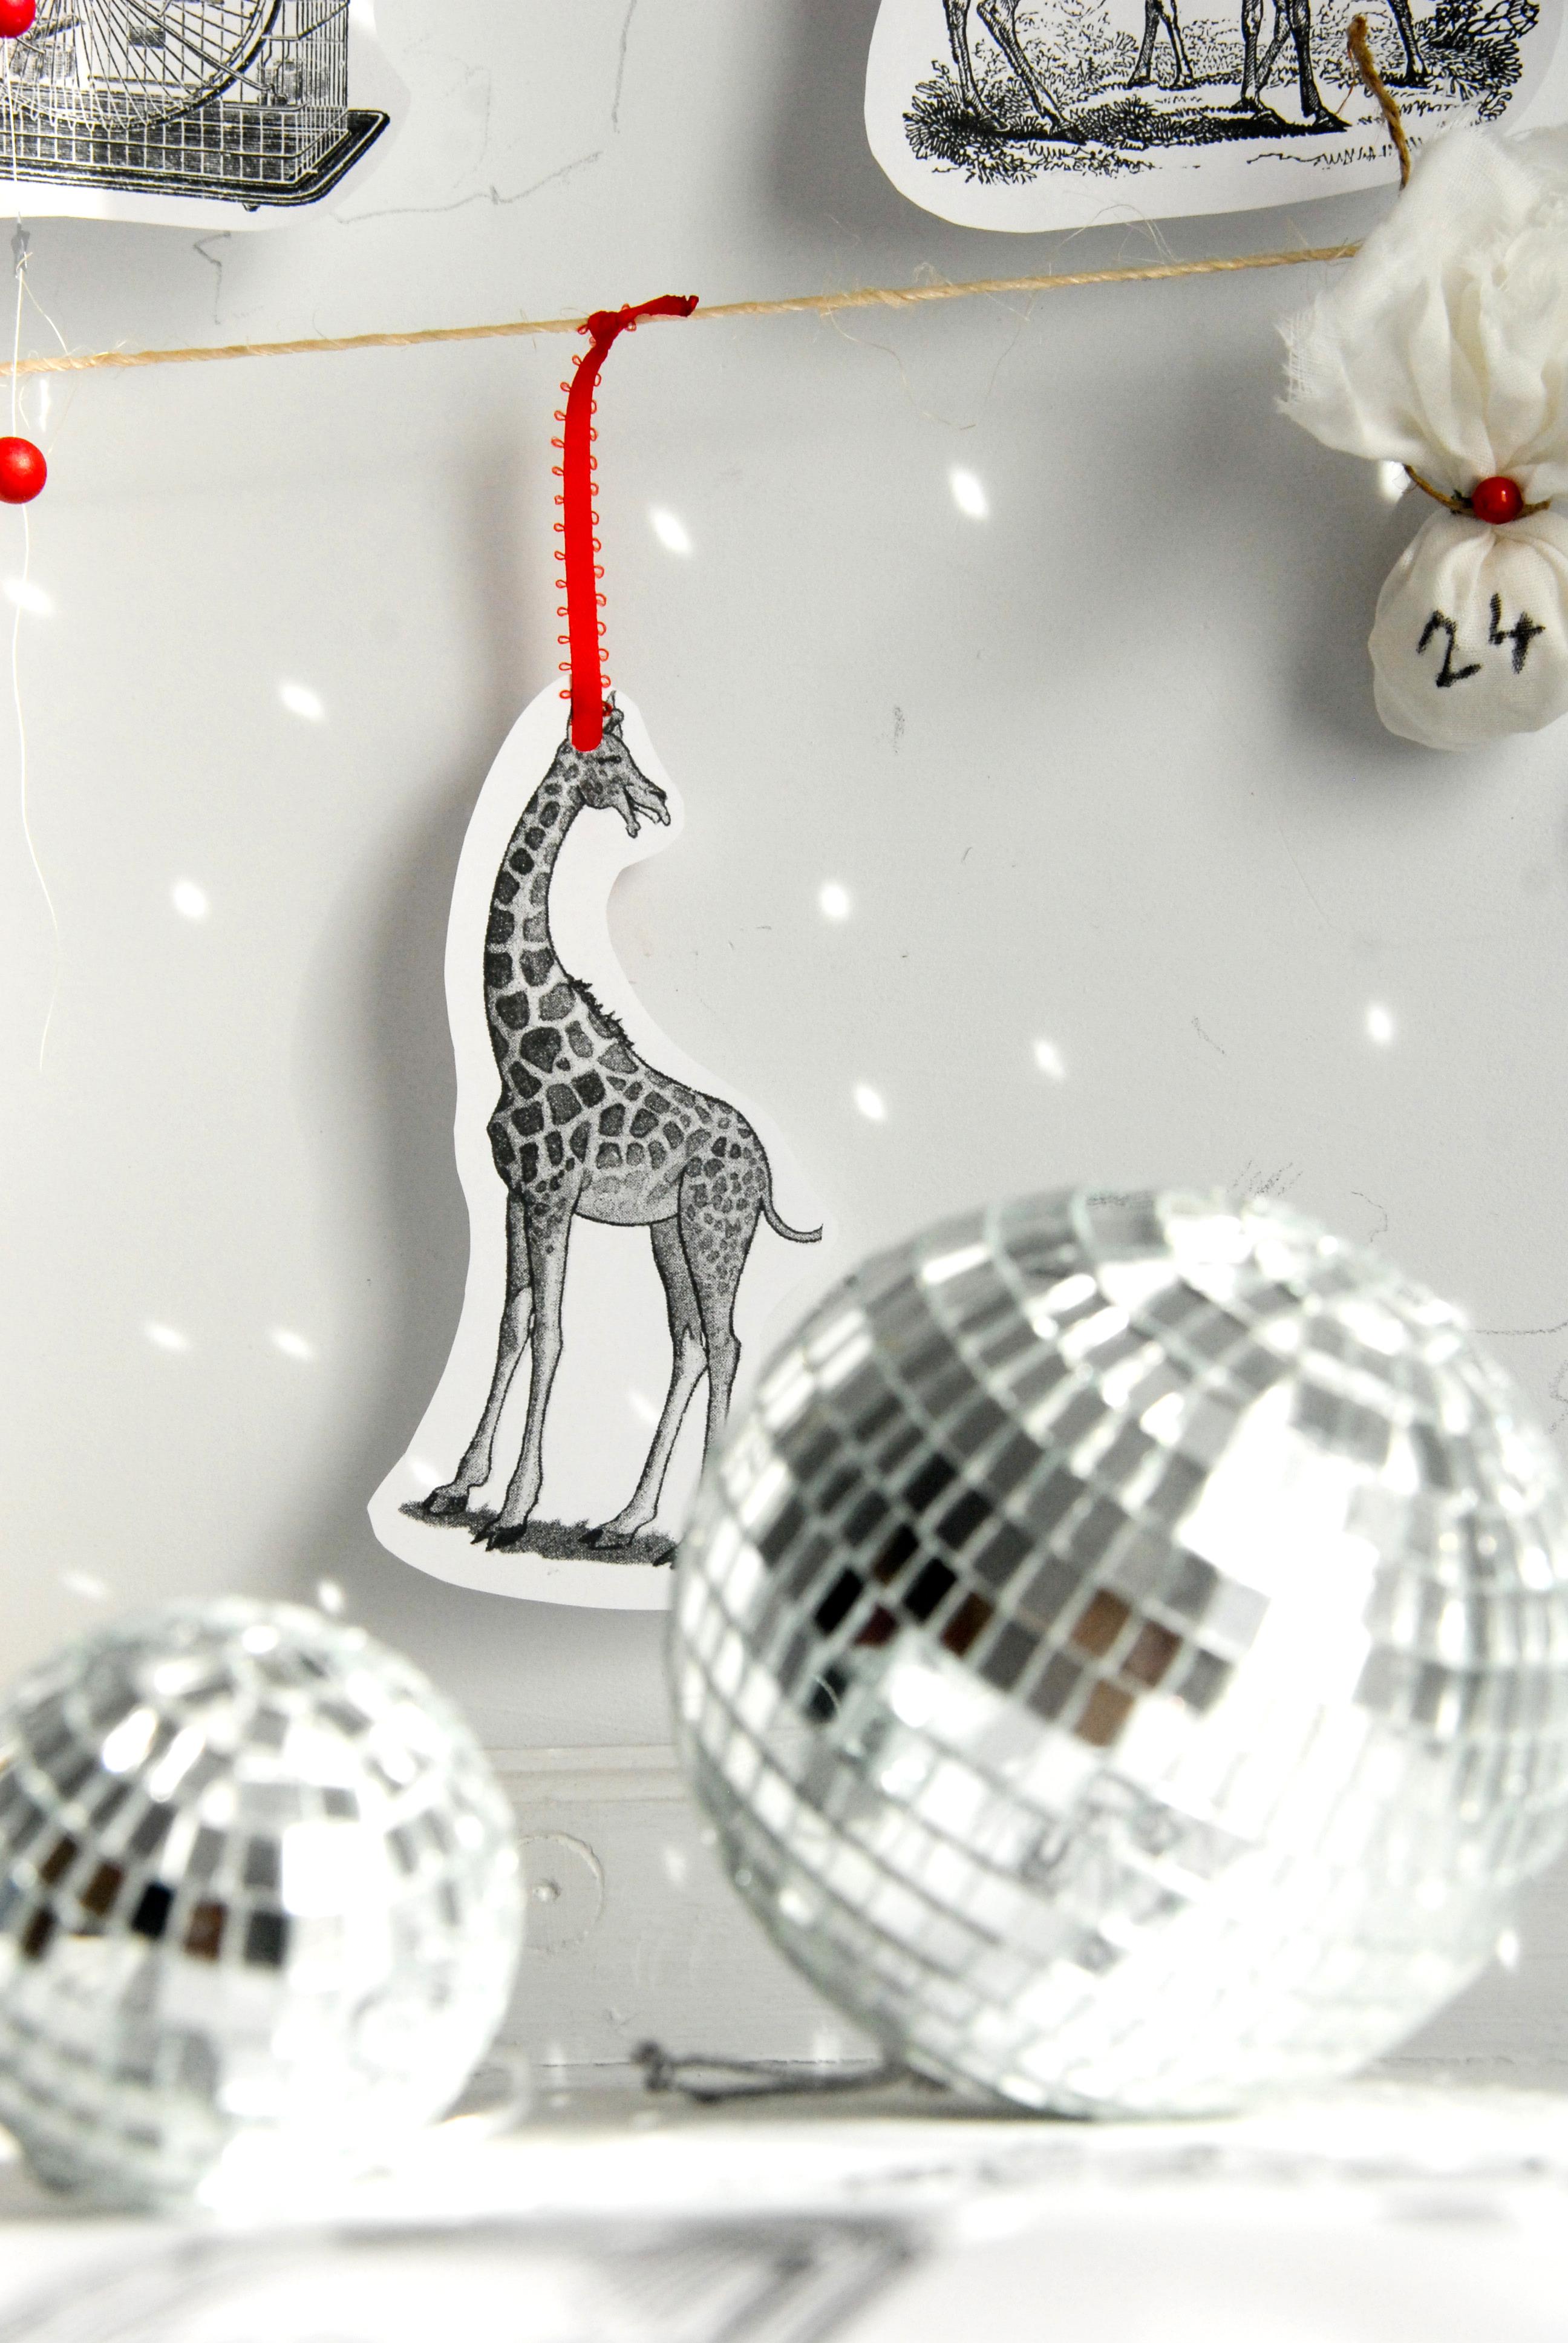 Adventskalender basteln – Giraffe #diy #dekoidee #weihnachtsdeko ©living4media/Sybille Roessler